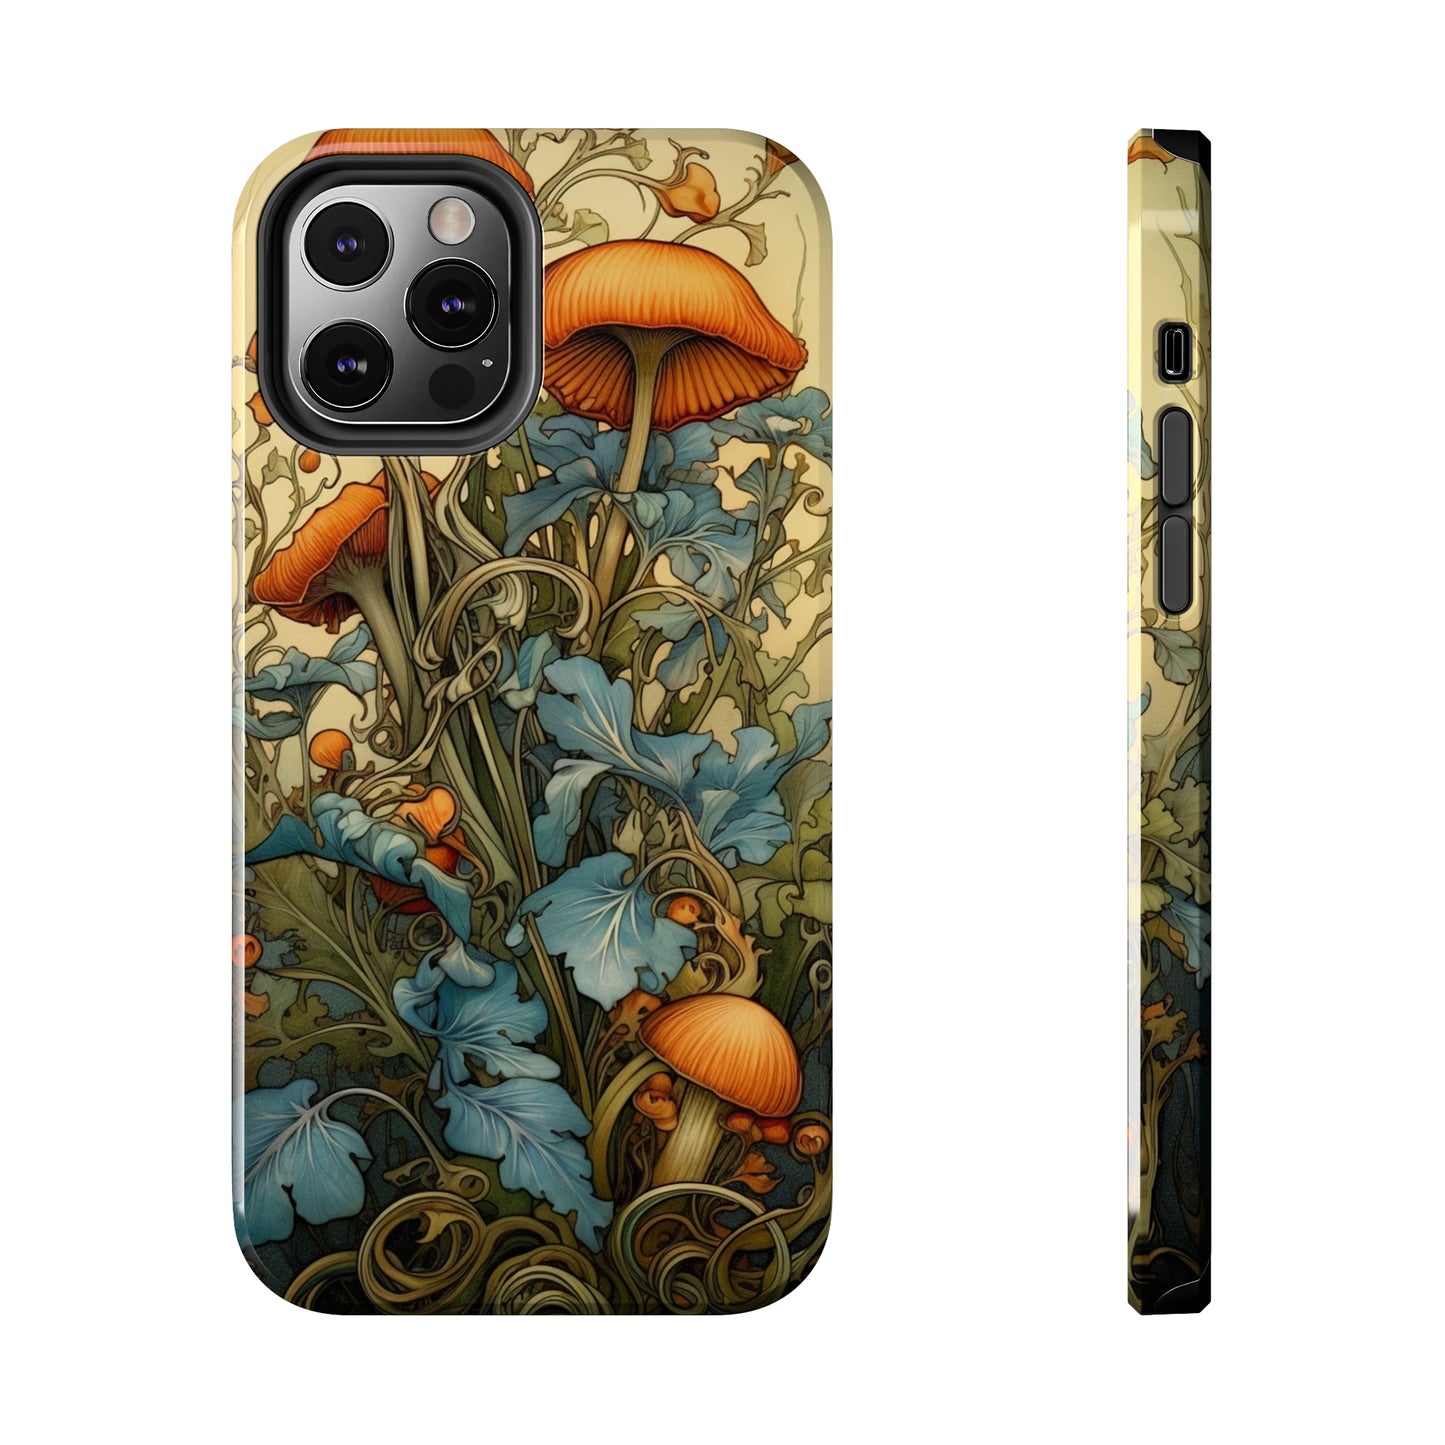 Vintage Mushroom Design iPhone Case